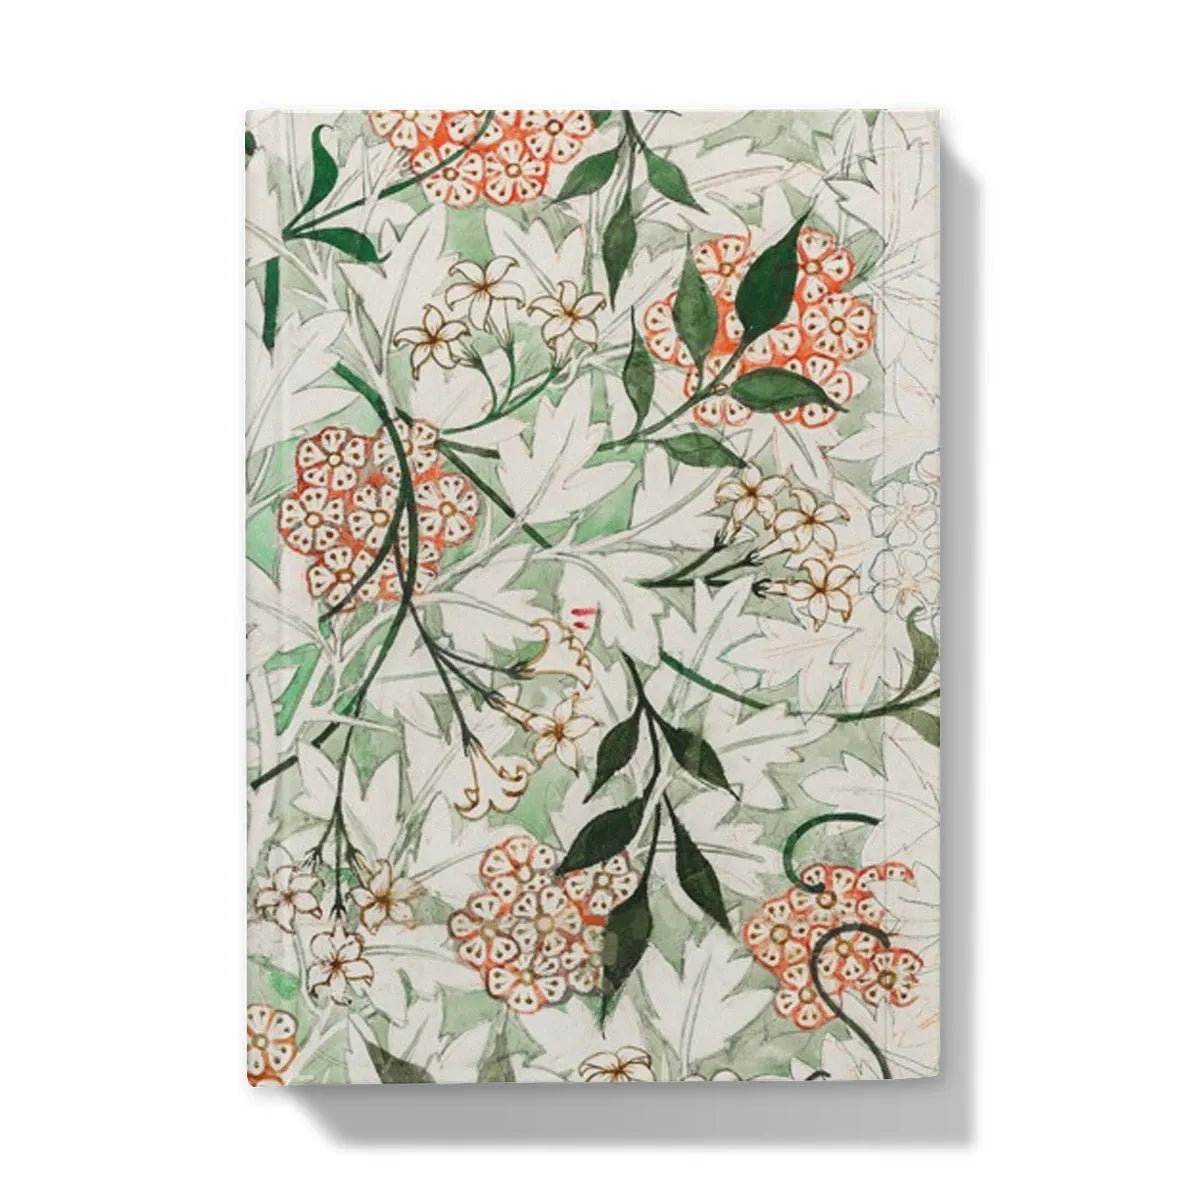 Jasmine By William Morris Hardback Journal - 5’x7’ / 5’ x 7’ - Lined Paper - Notebooks & Notepads - Aesthetic Art